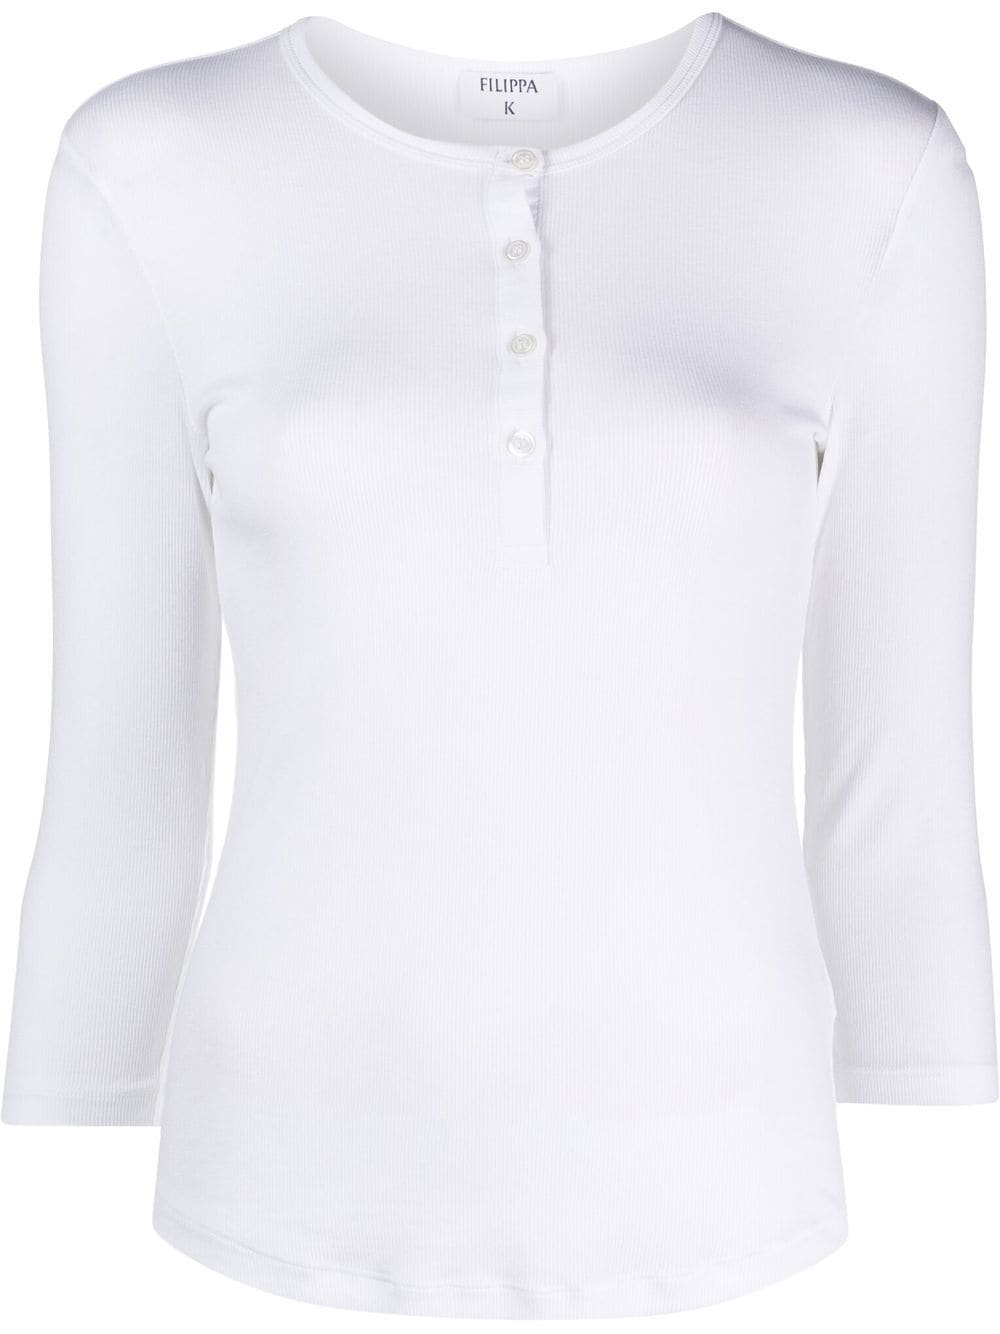 filippa k button-up jersey top - white